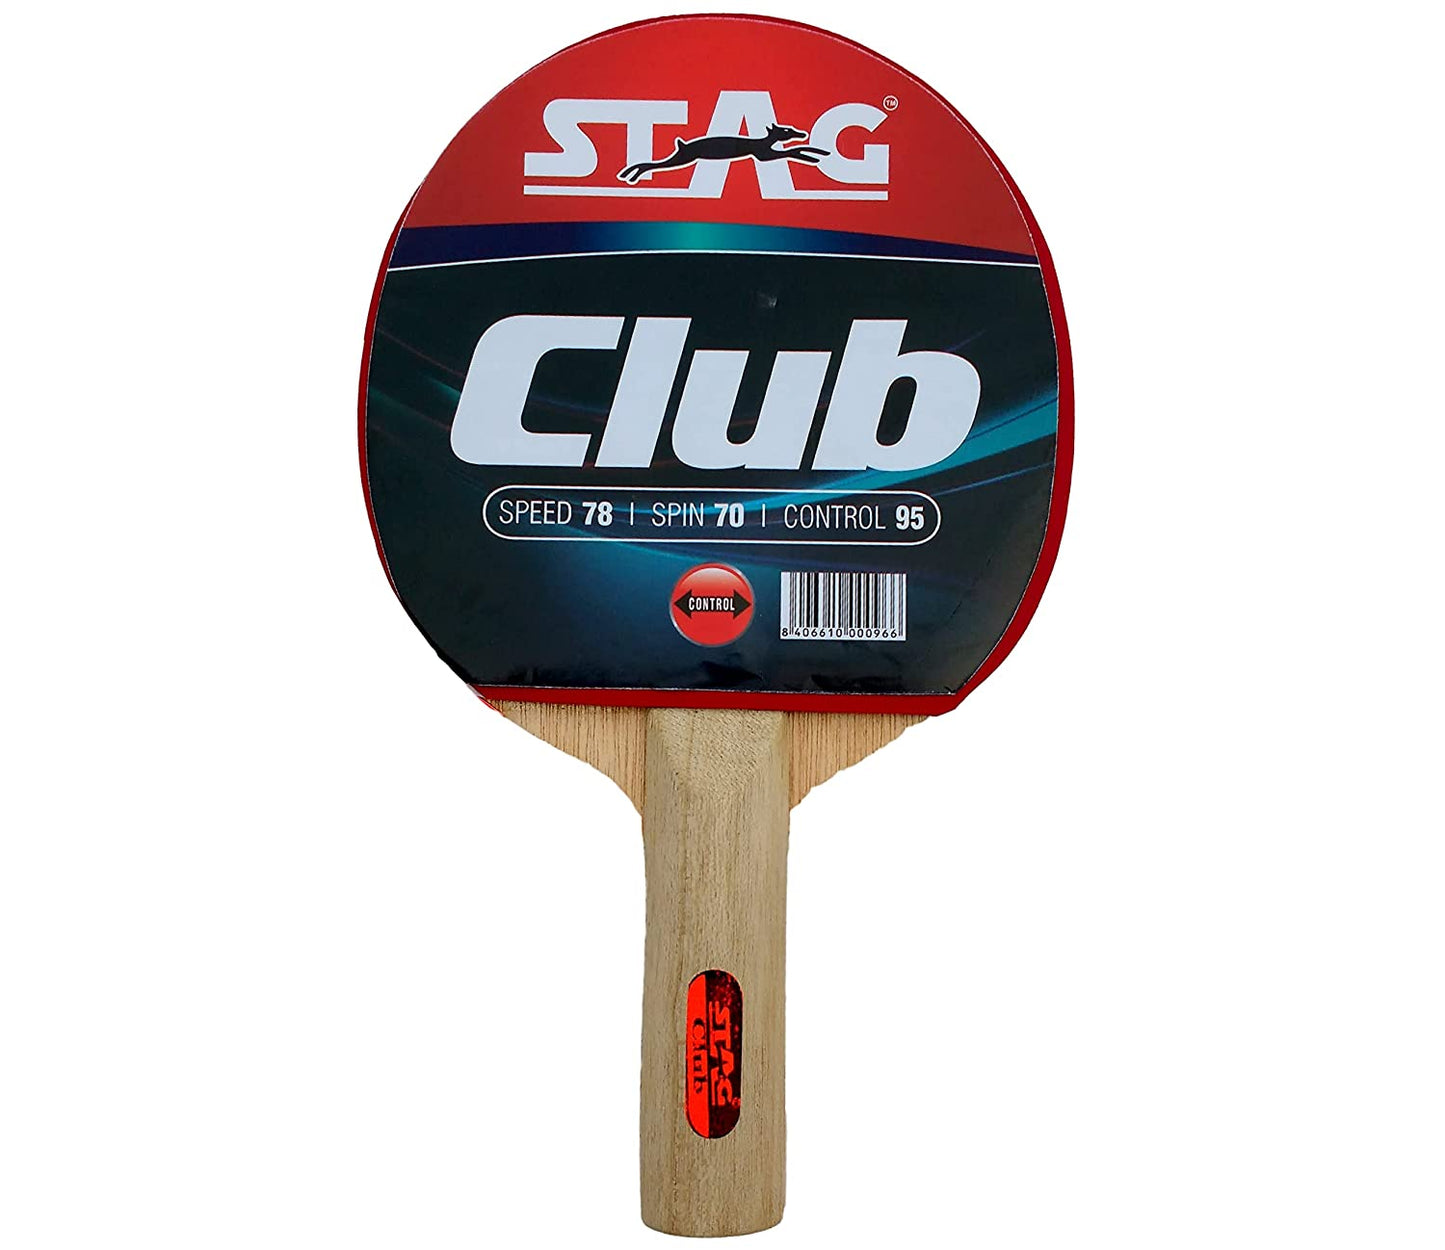 Stag Club Table Tennis Racket, Red/Black - Best Price online Prokicksports.com